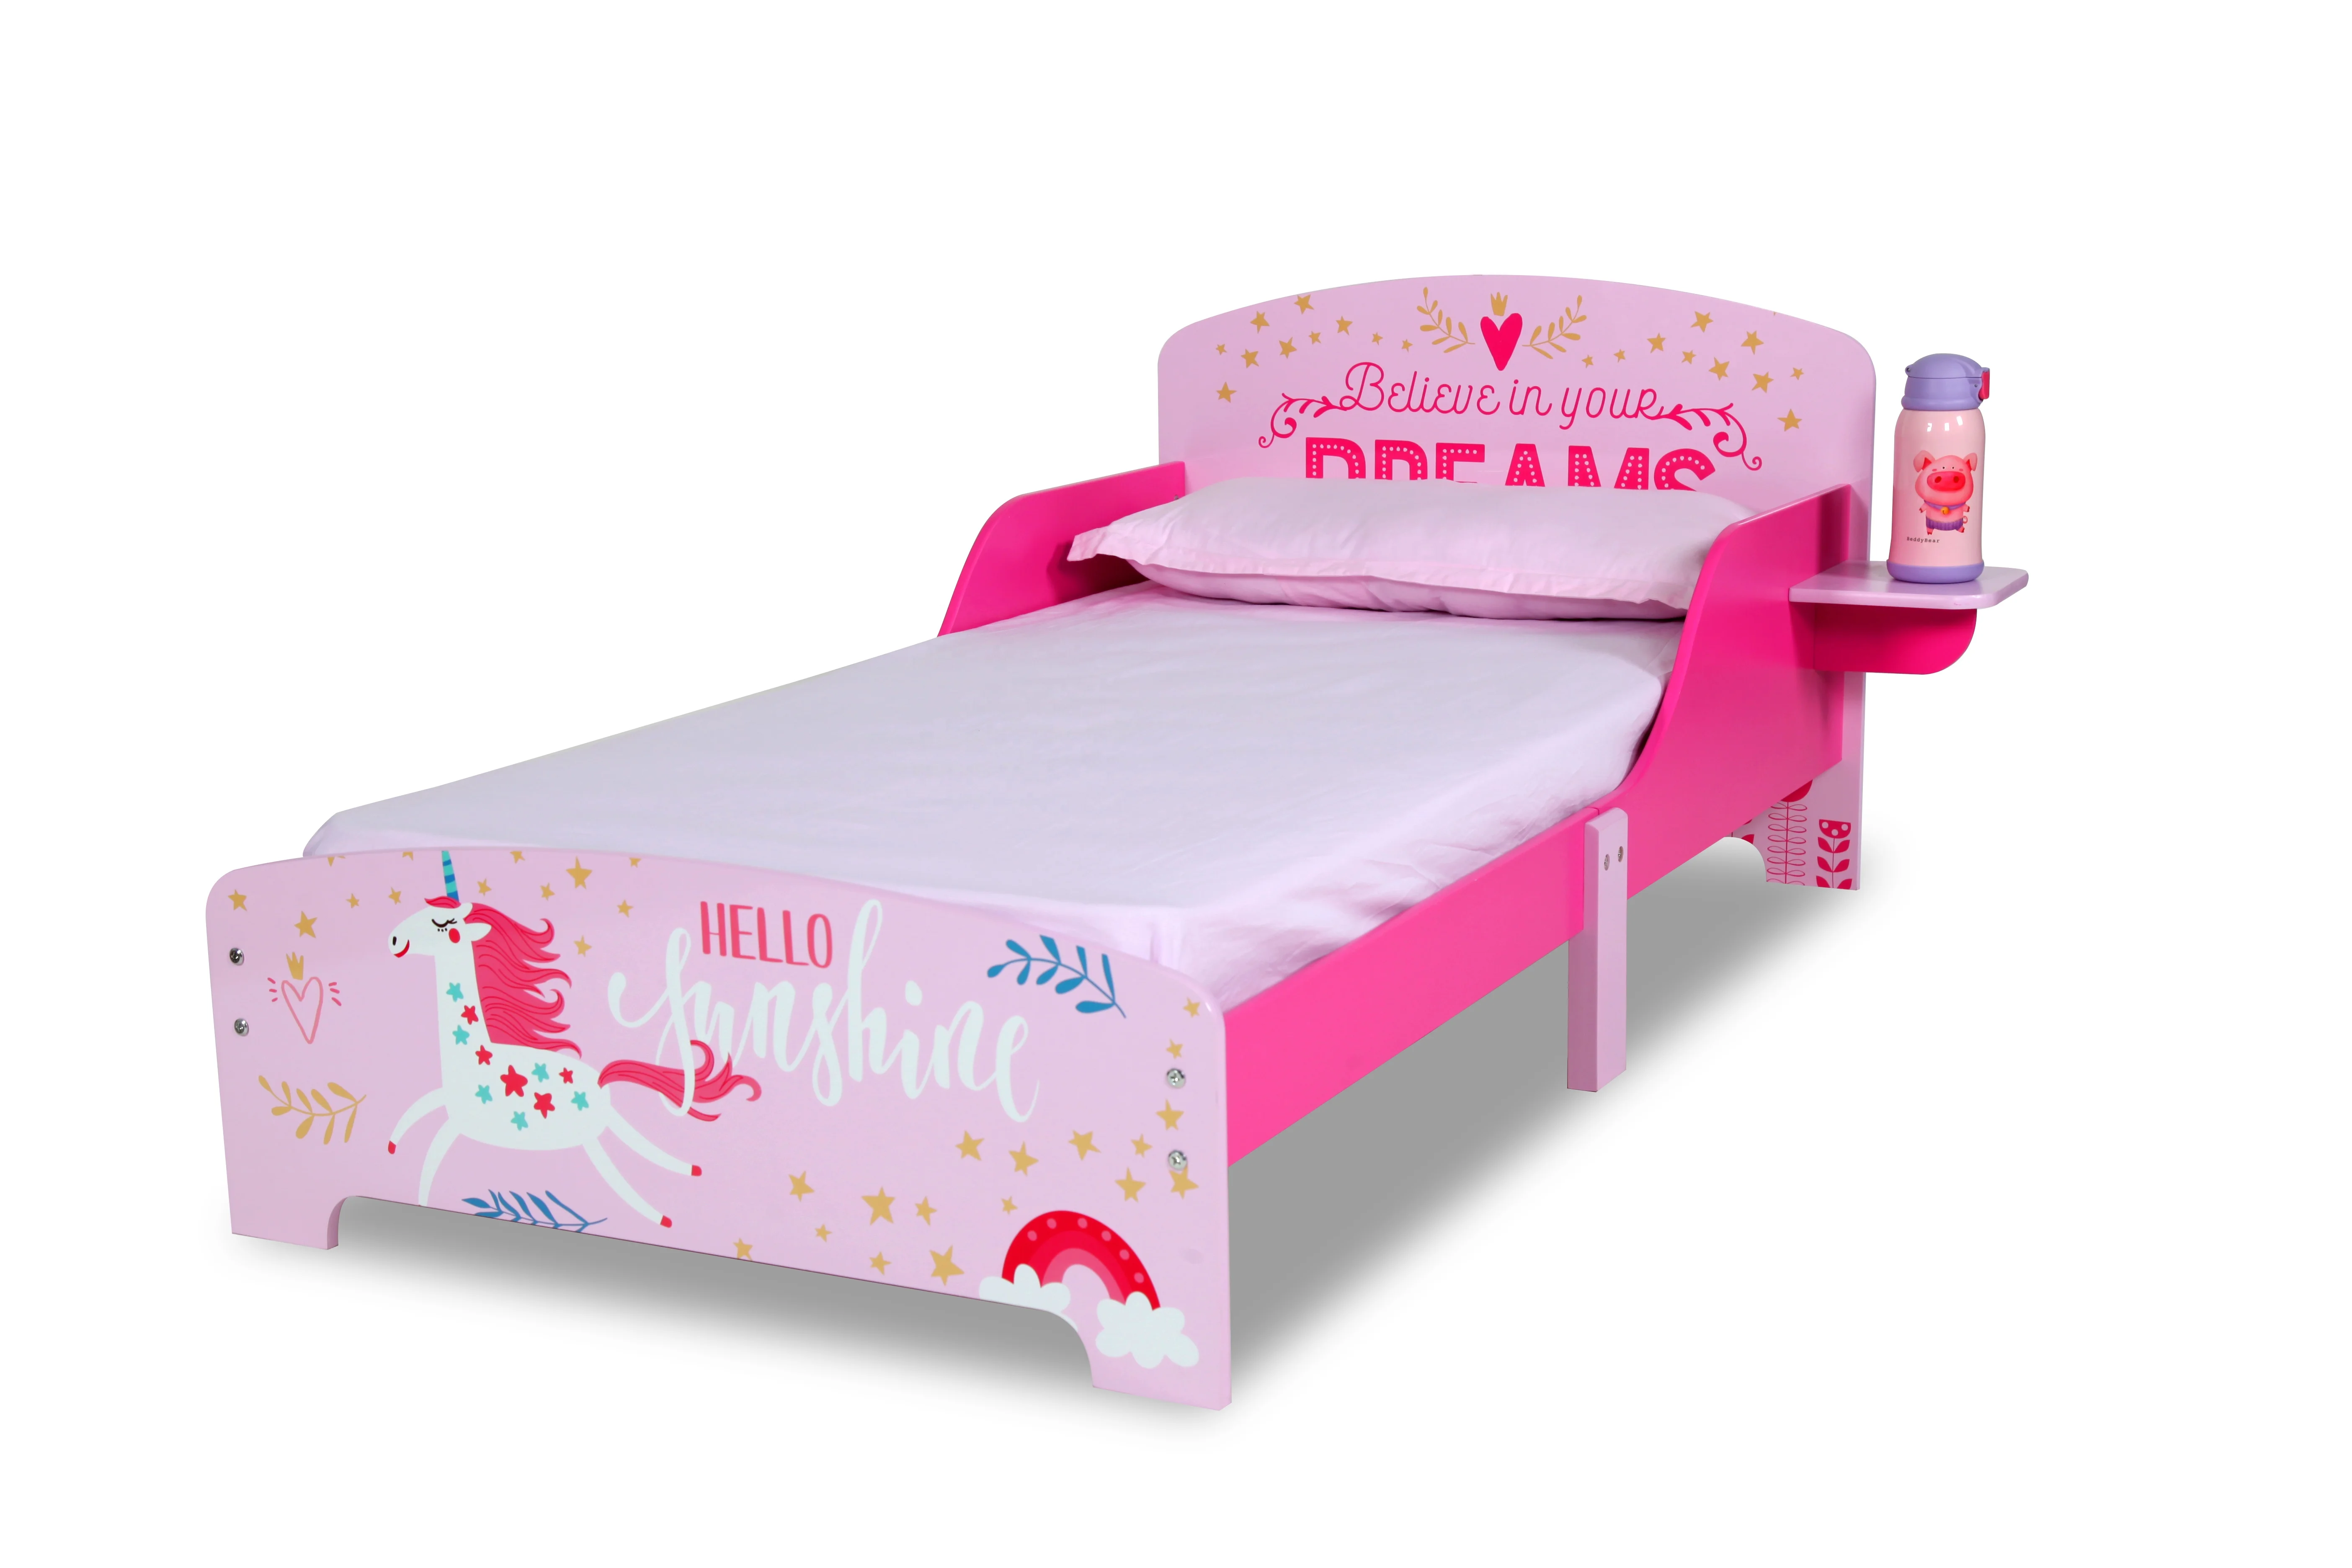 Toffy Friends Ranjang Tunggal Anak Perempuan Tempat Tidur Kayu Desain Unicorn Angsa Buy Tempat Tidur Untuk Anak Anak Anak Anak Bedsfor Gadis Anak Anak Putri Tidur Product On Alibaba Com